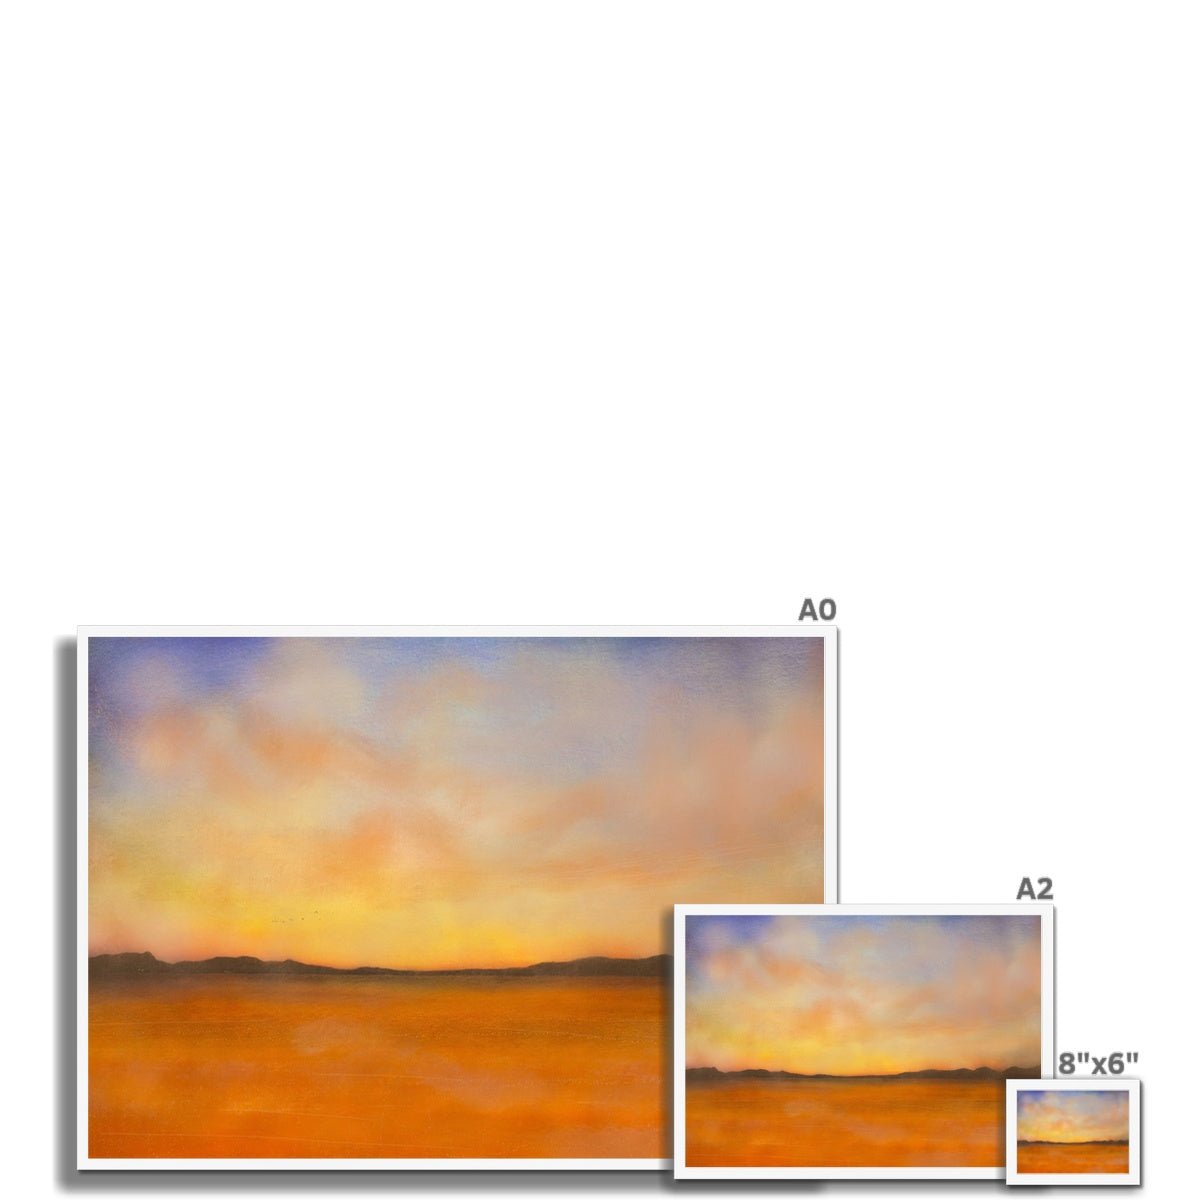 Islay Dawn Painting | Framed Prints From Scotland-Framed Prints-Hebridean Islands Art Gallery-Paintings, Prints, Homeware, Art Gifts From Scotland By Scottish Artist Kevin Hunter